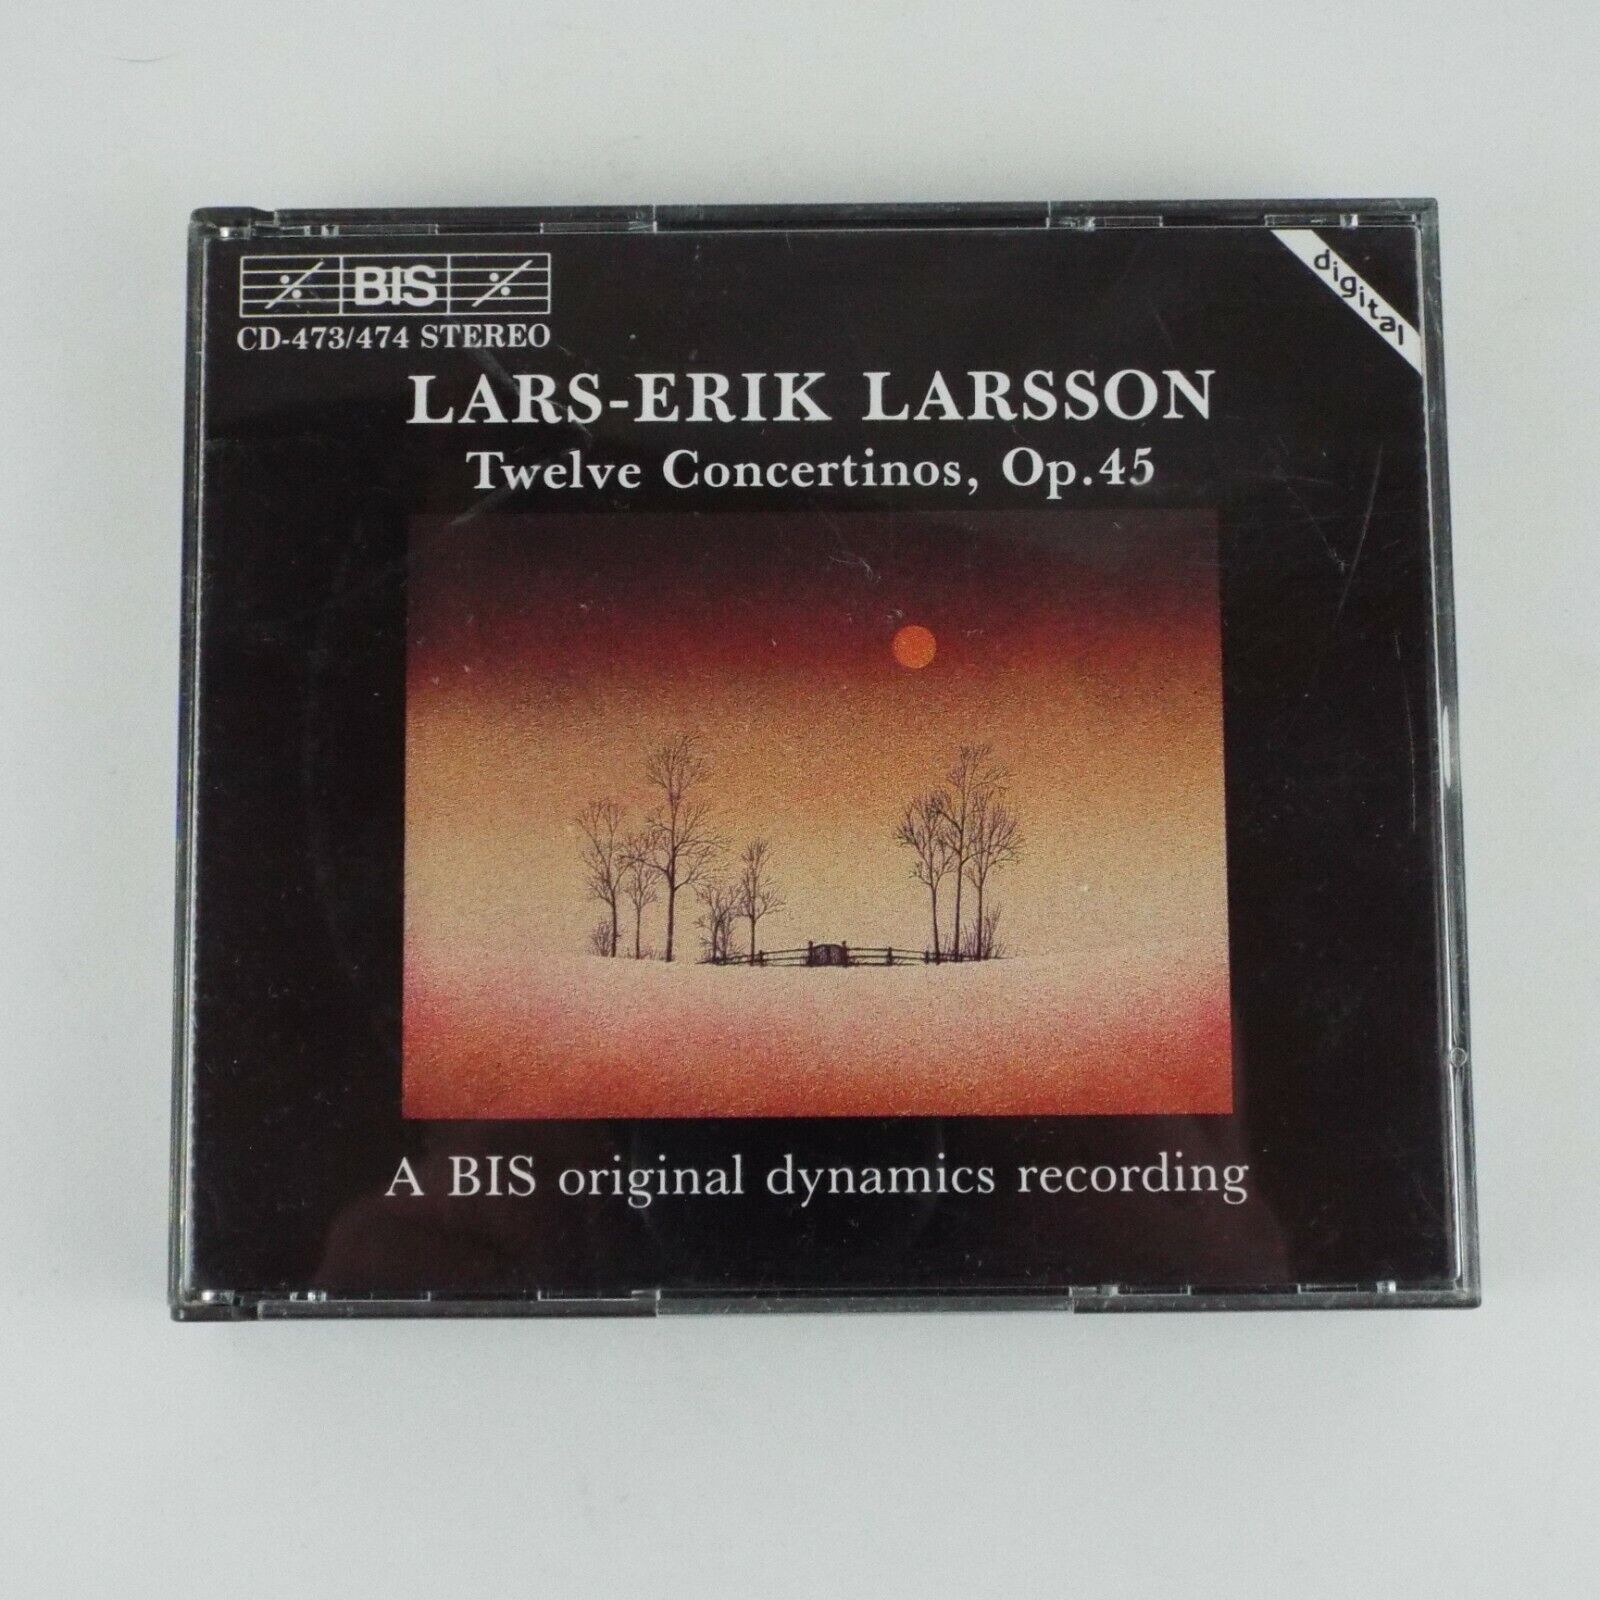 Larsson 12 Concertinos Op 45 Urban Agnas Berndt Andersson 2 CD BIS-CD-473/474